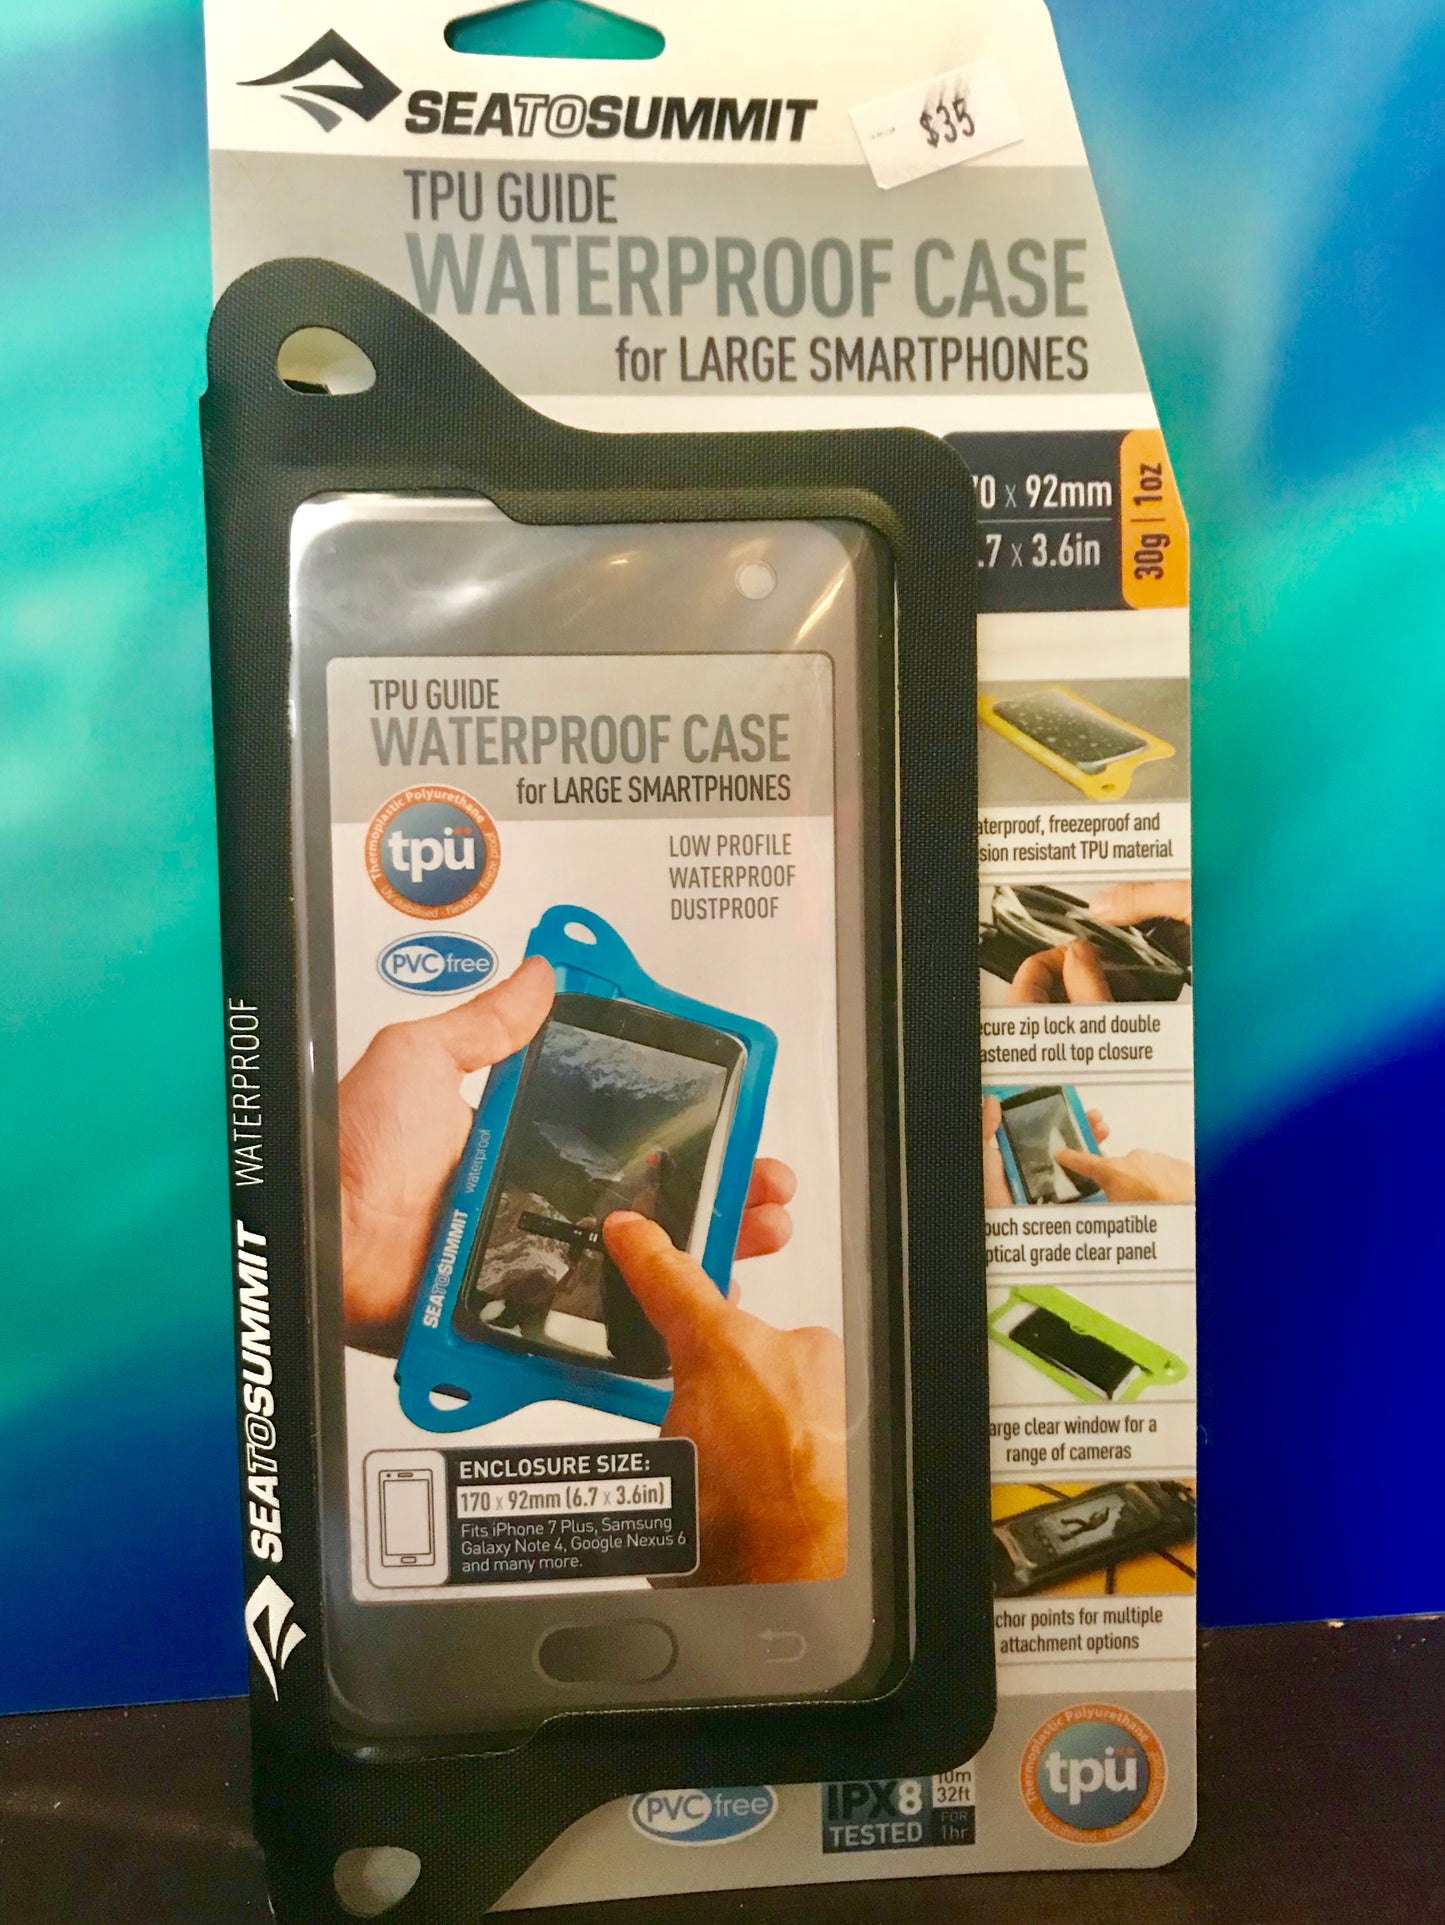 Sea To Summit TPU Waterproof Phone Case